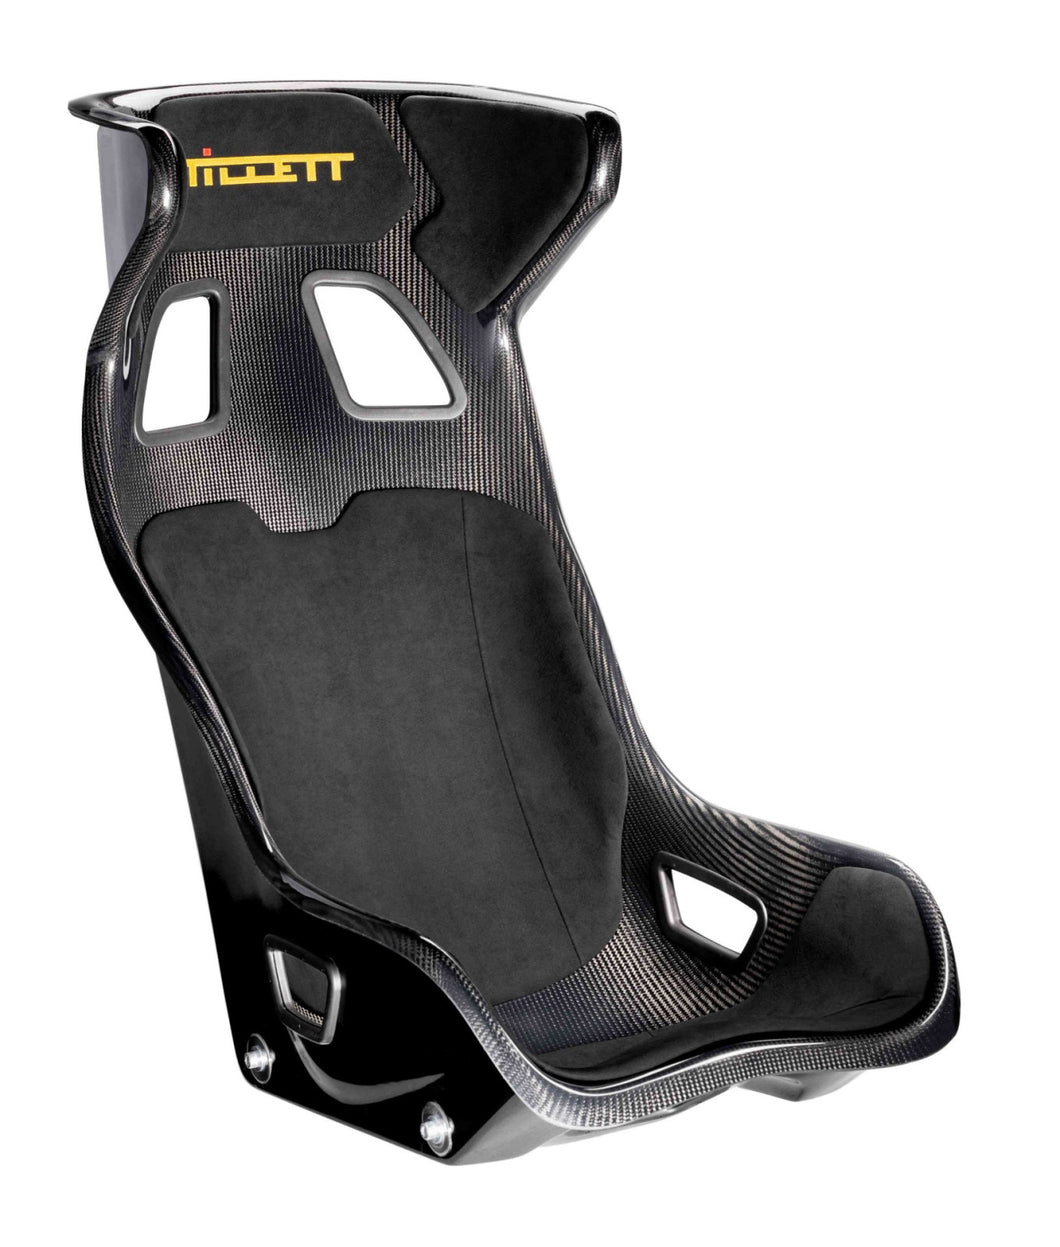 Tillett C1 Black GRP Race Car Seat